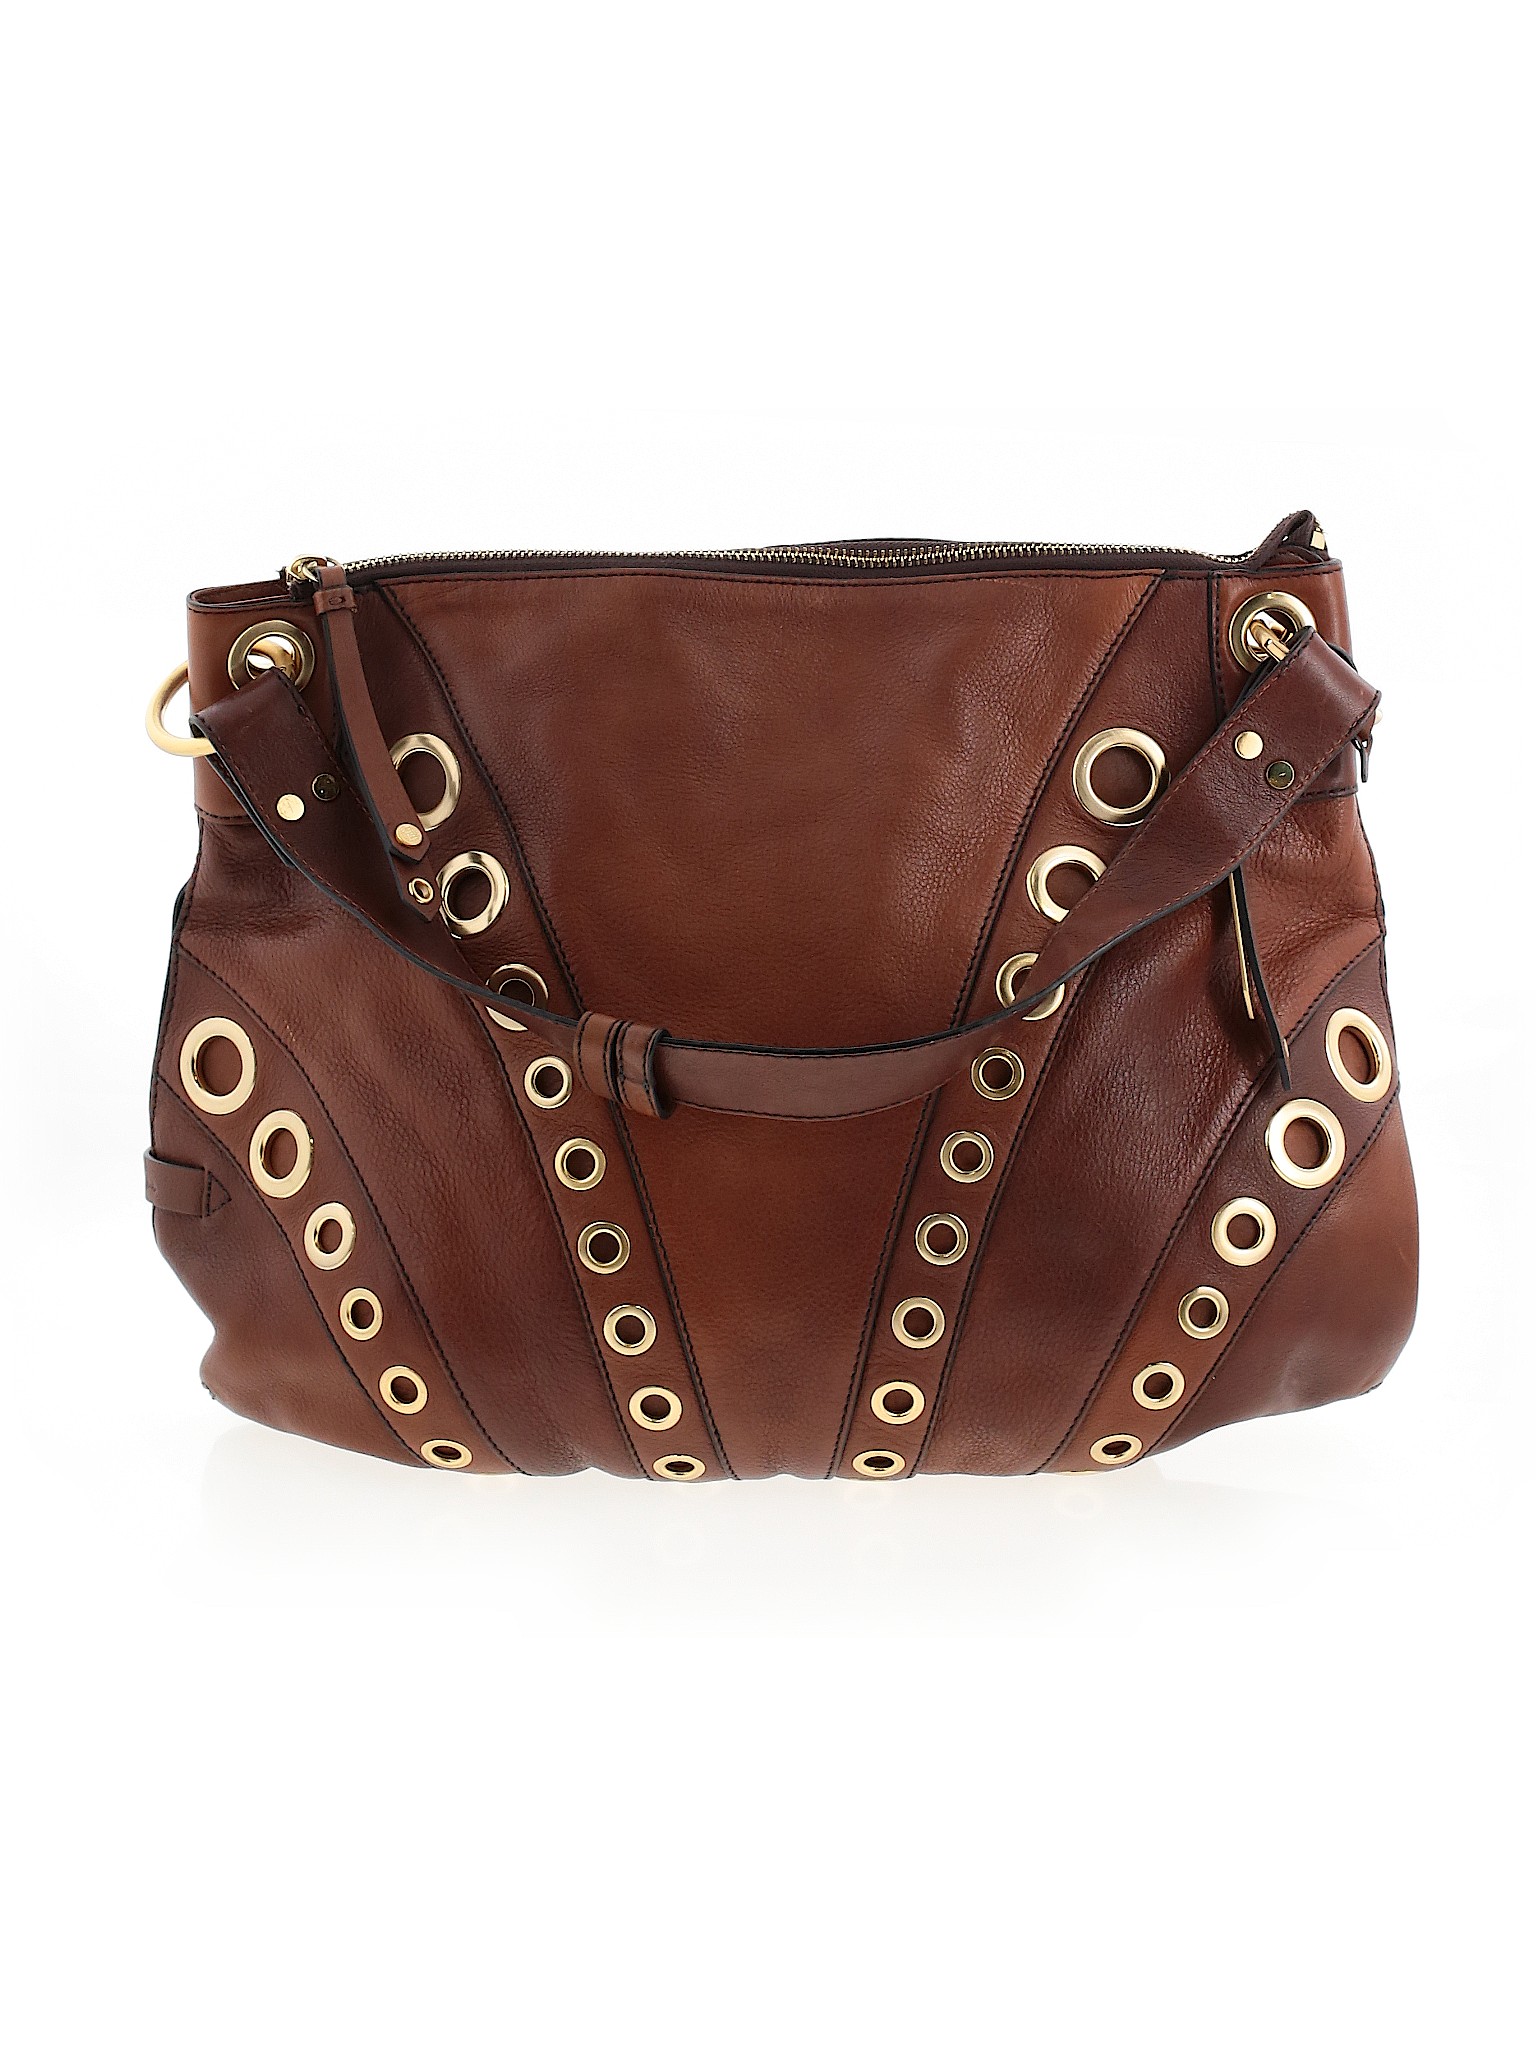 Cole Haan Women Brown Leather Shoulder Bag One Size | eBay